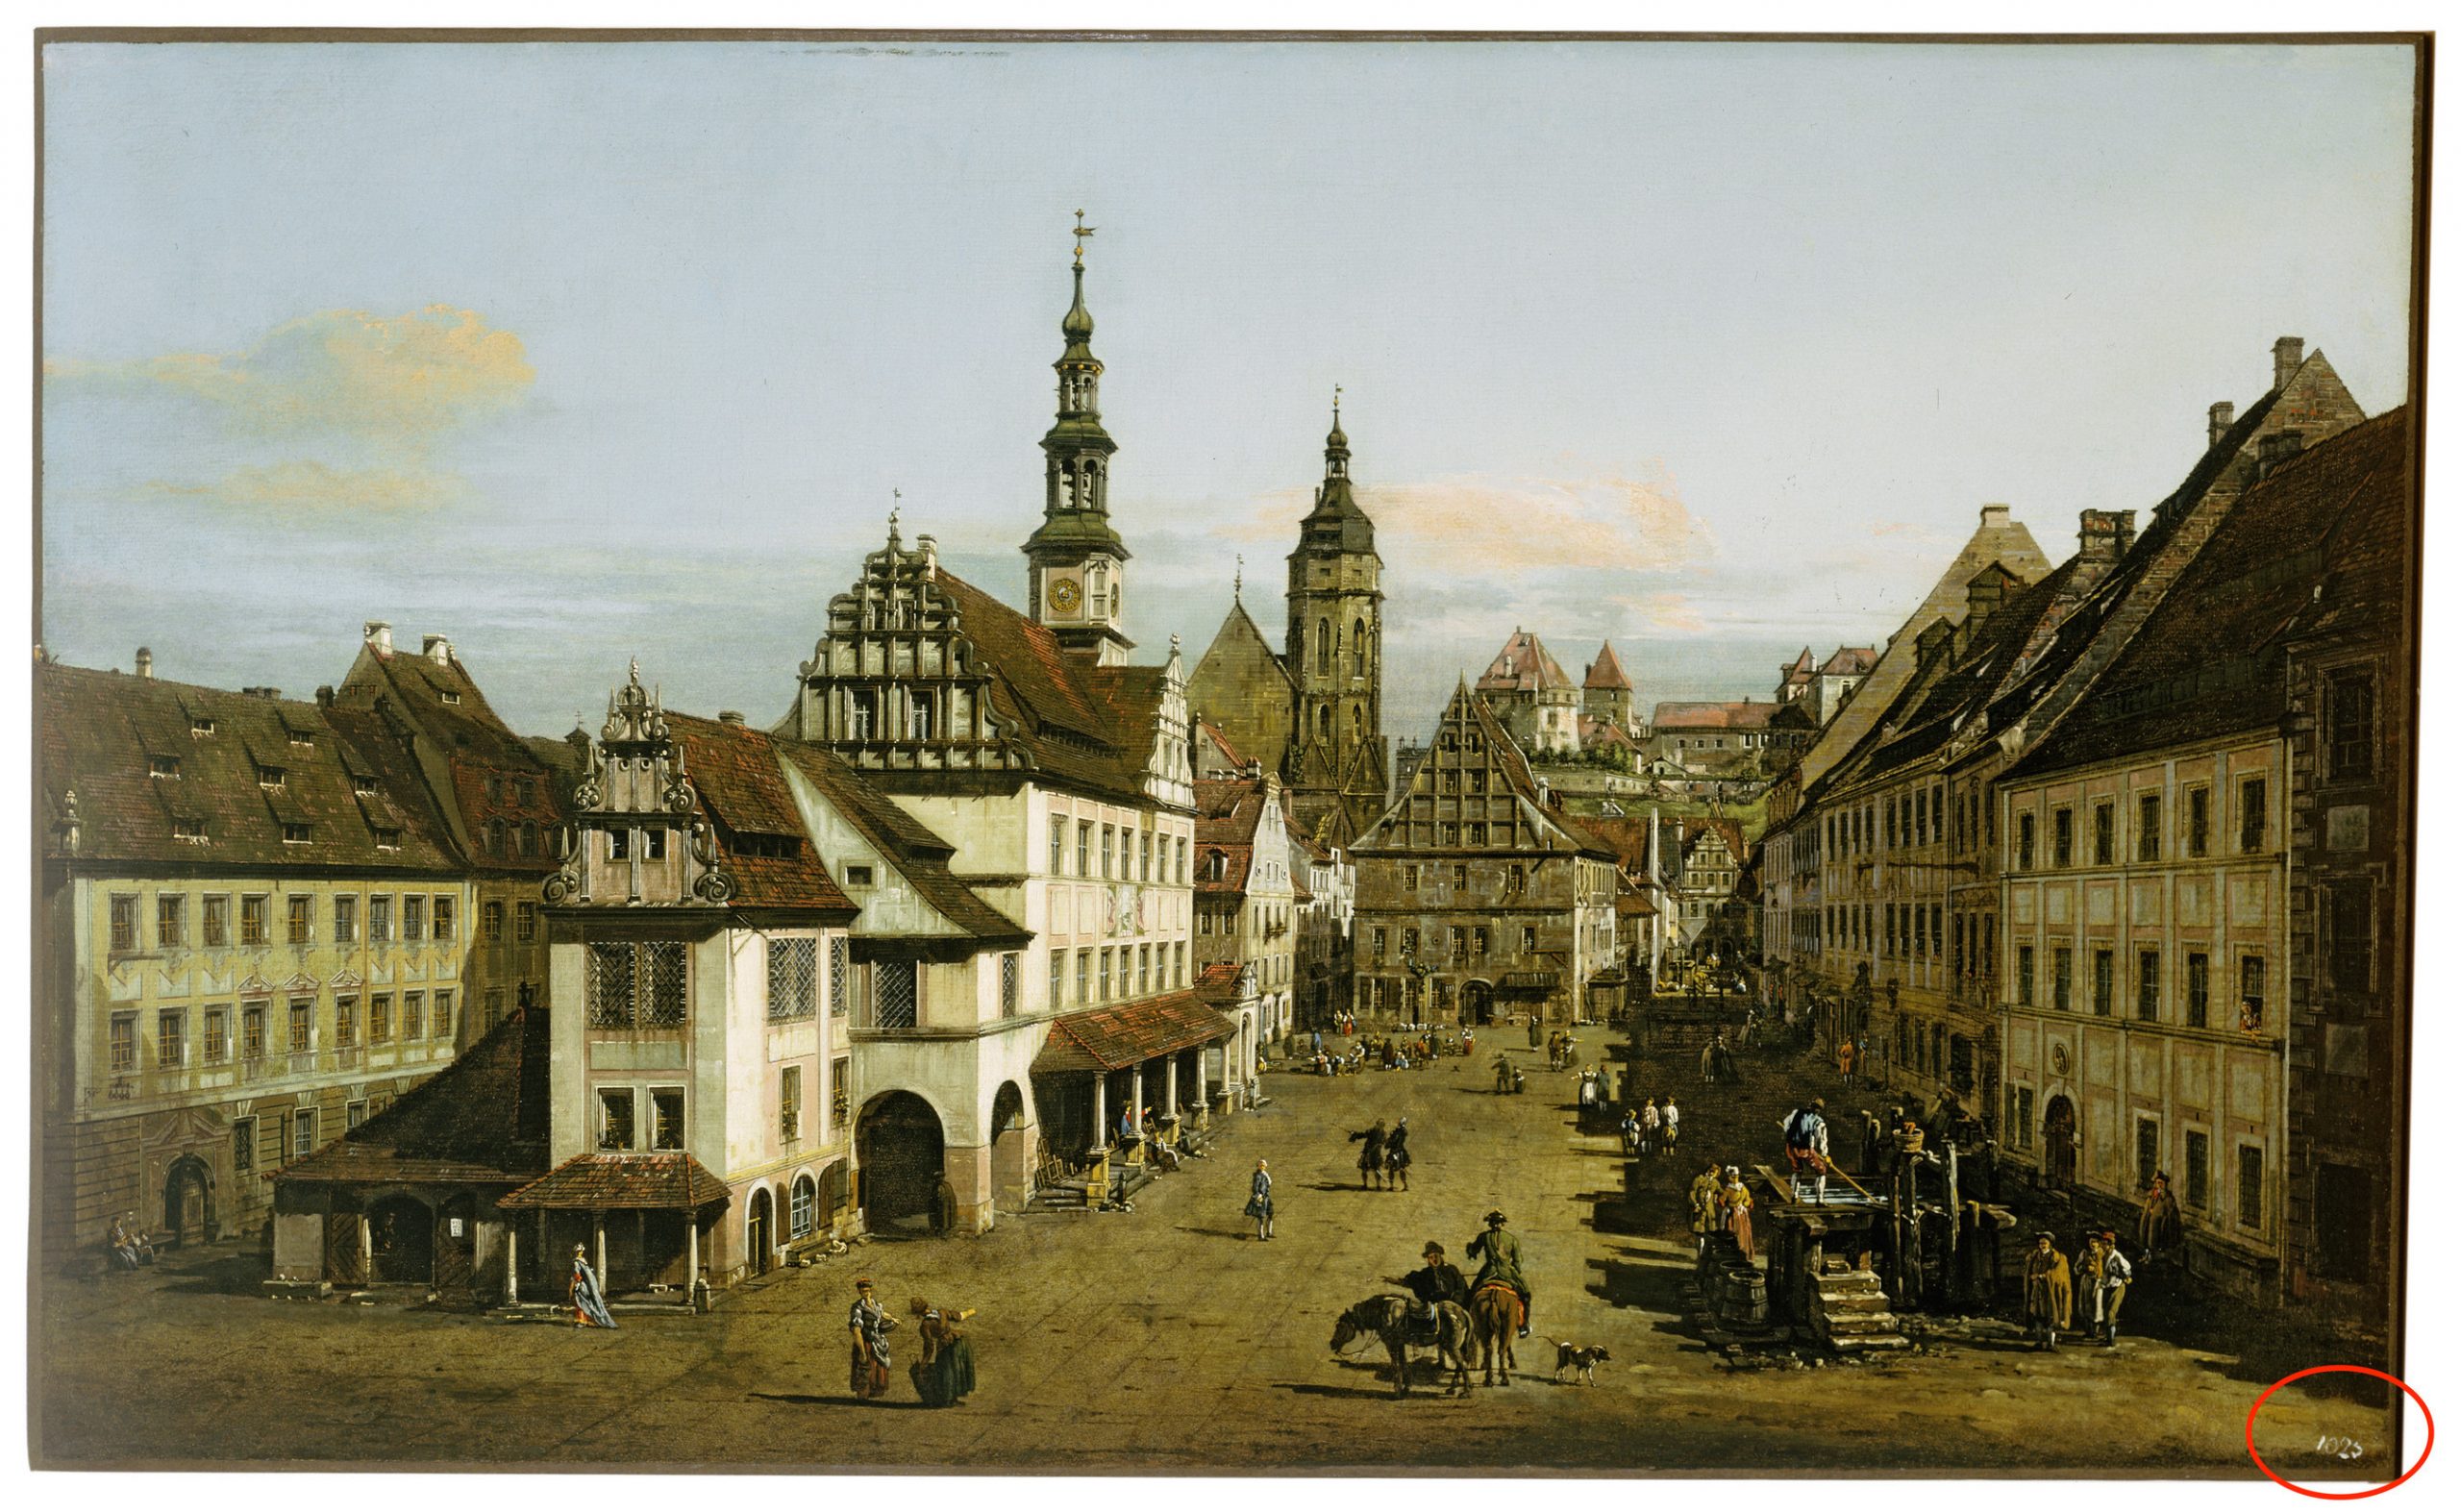 Bernardo Bellotto, The Marketplace at Pirna (c. 1764).